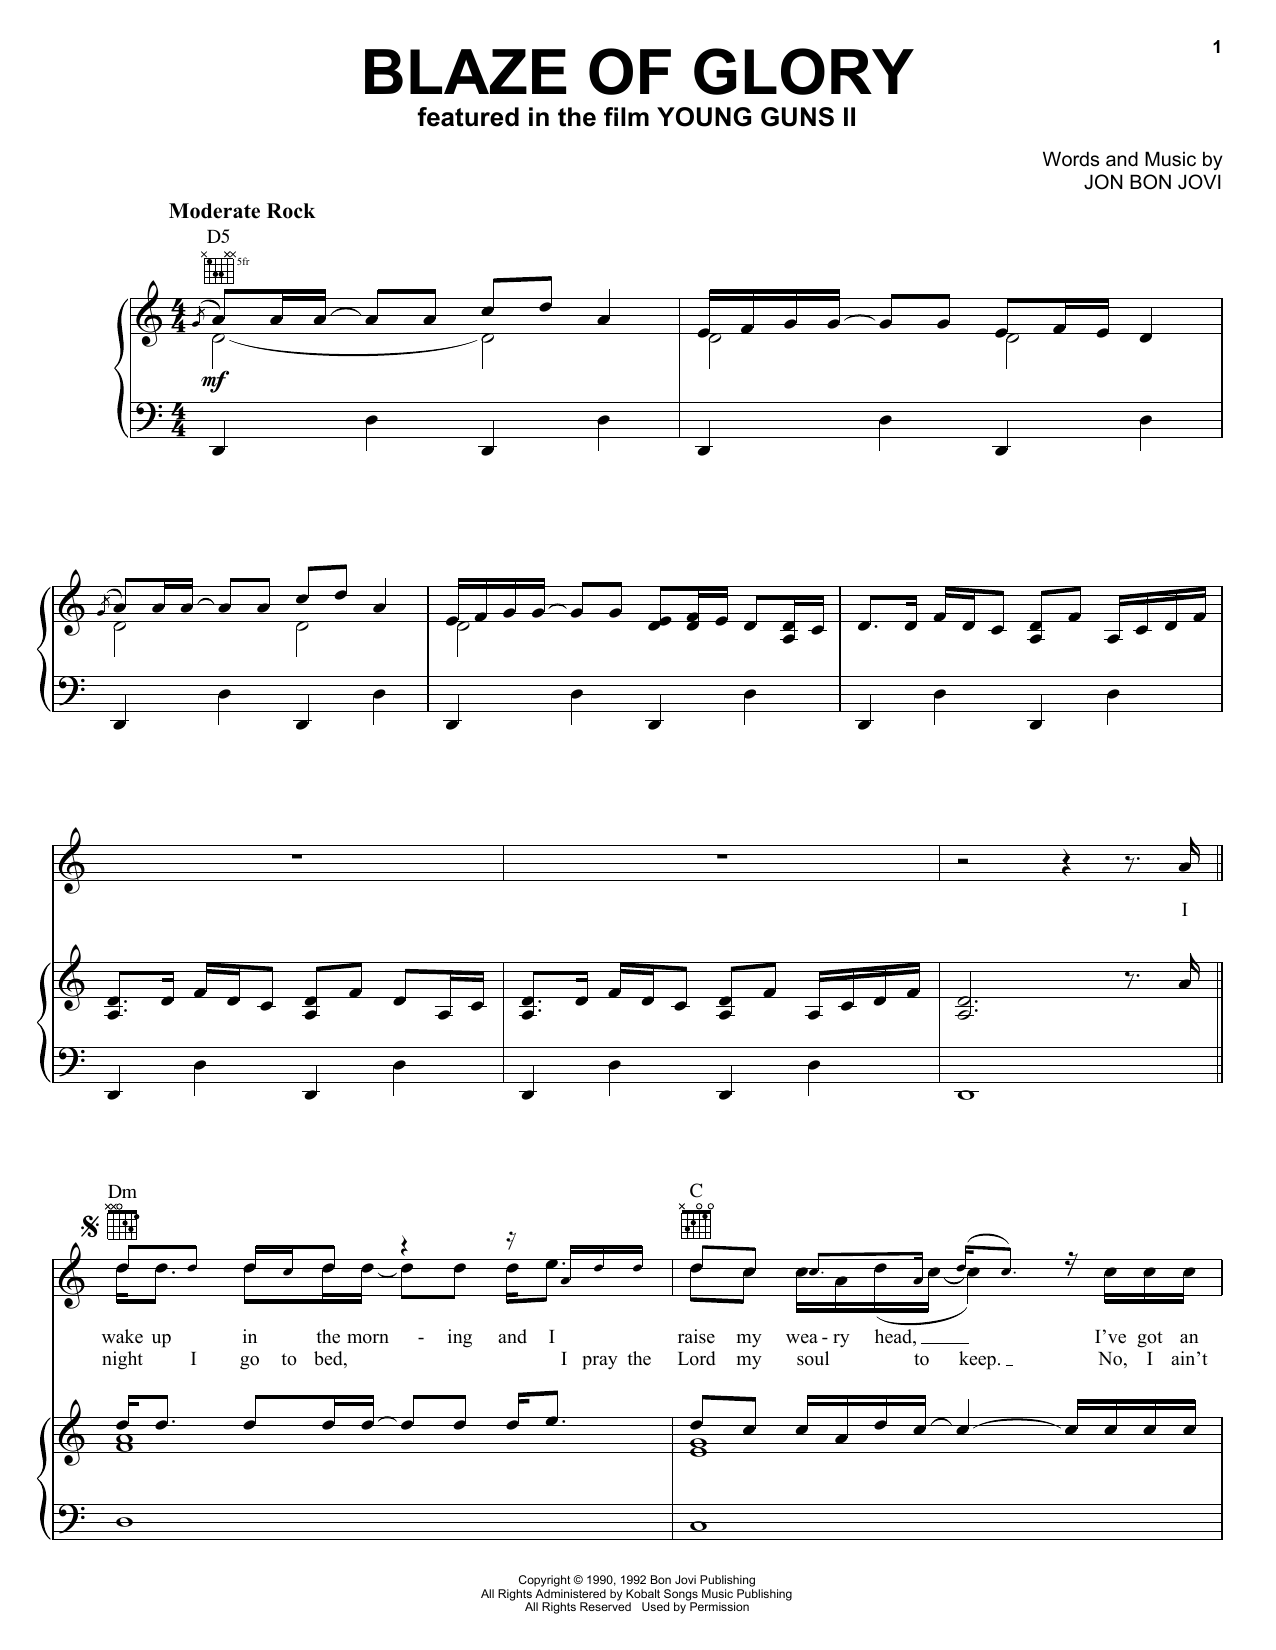 Download Jon Bon Jovi Blaze Of Glory Sheet Music and learn how to play Melody Line, Lyrics & Chords PDF digital score in minutes